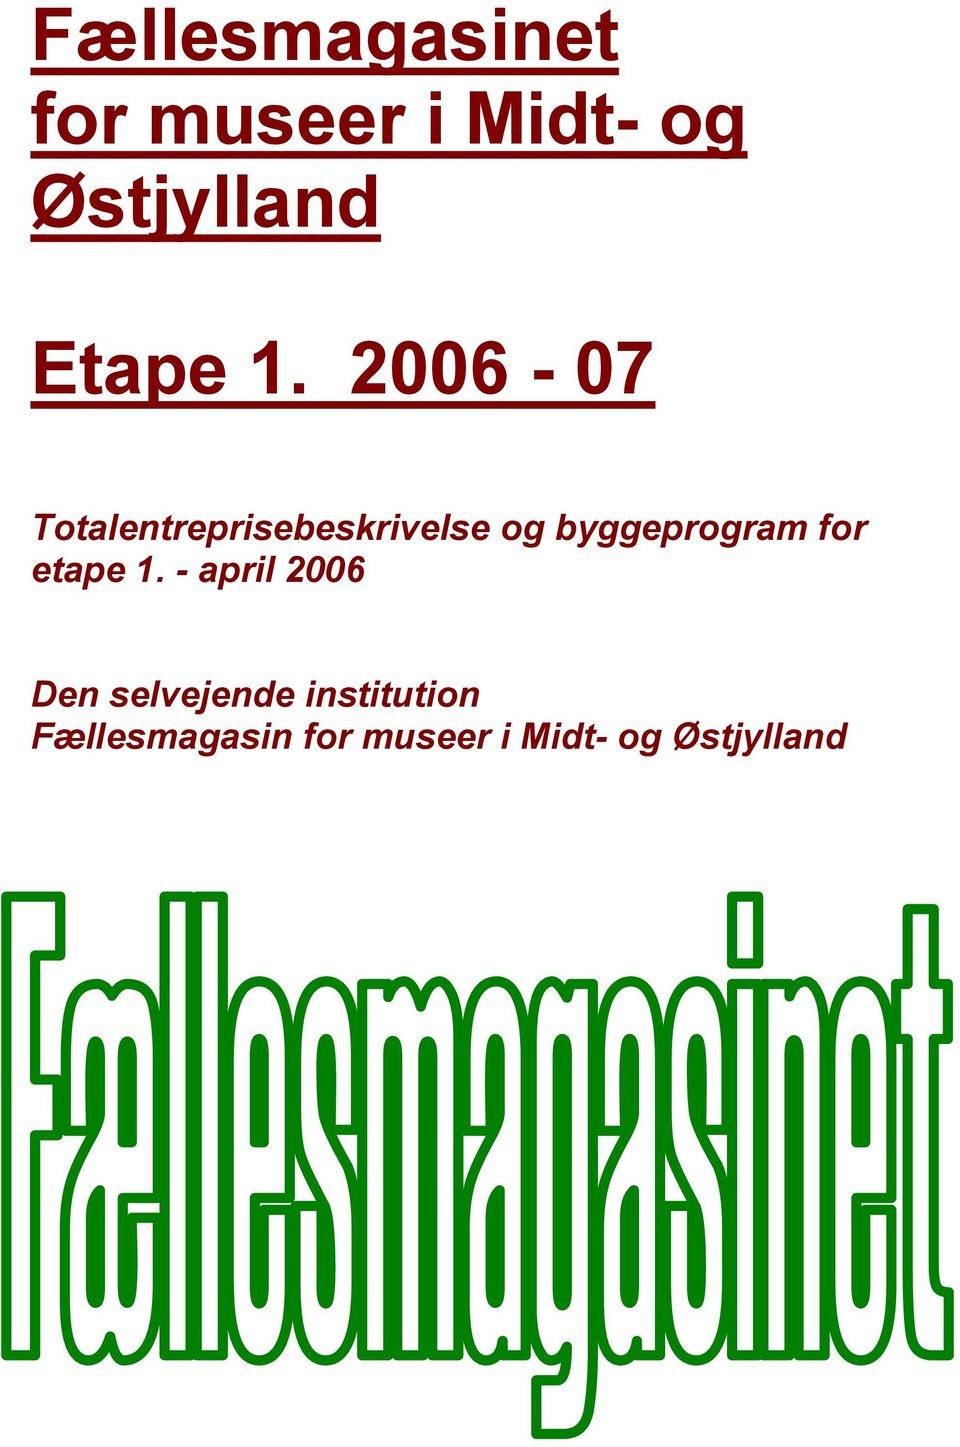 2006-07 Totalentreprisebeskrivelse og byggeprogram